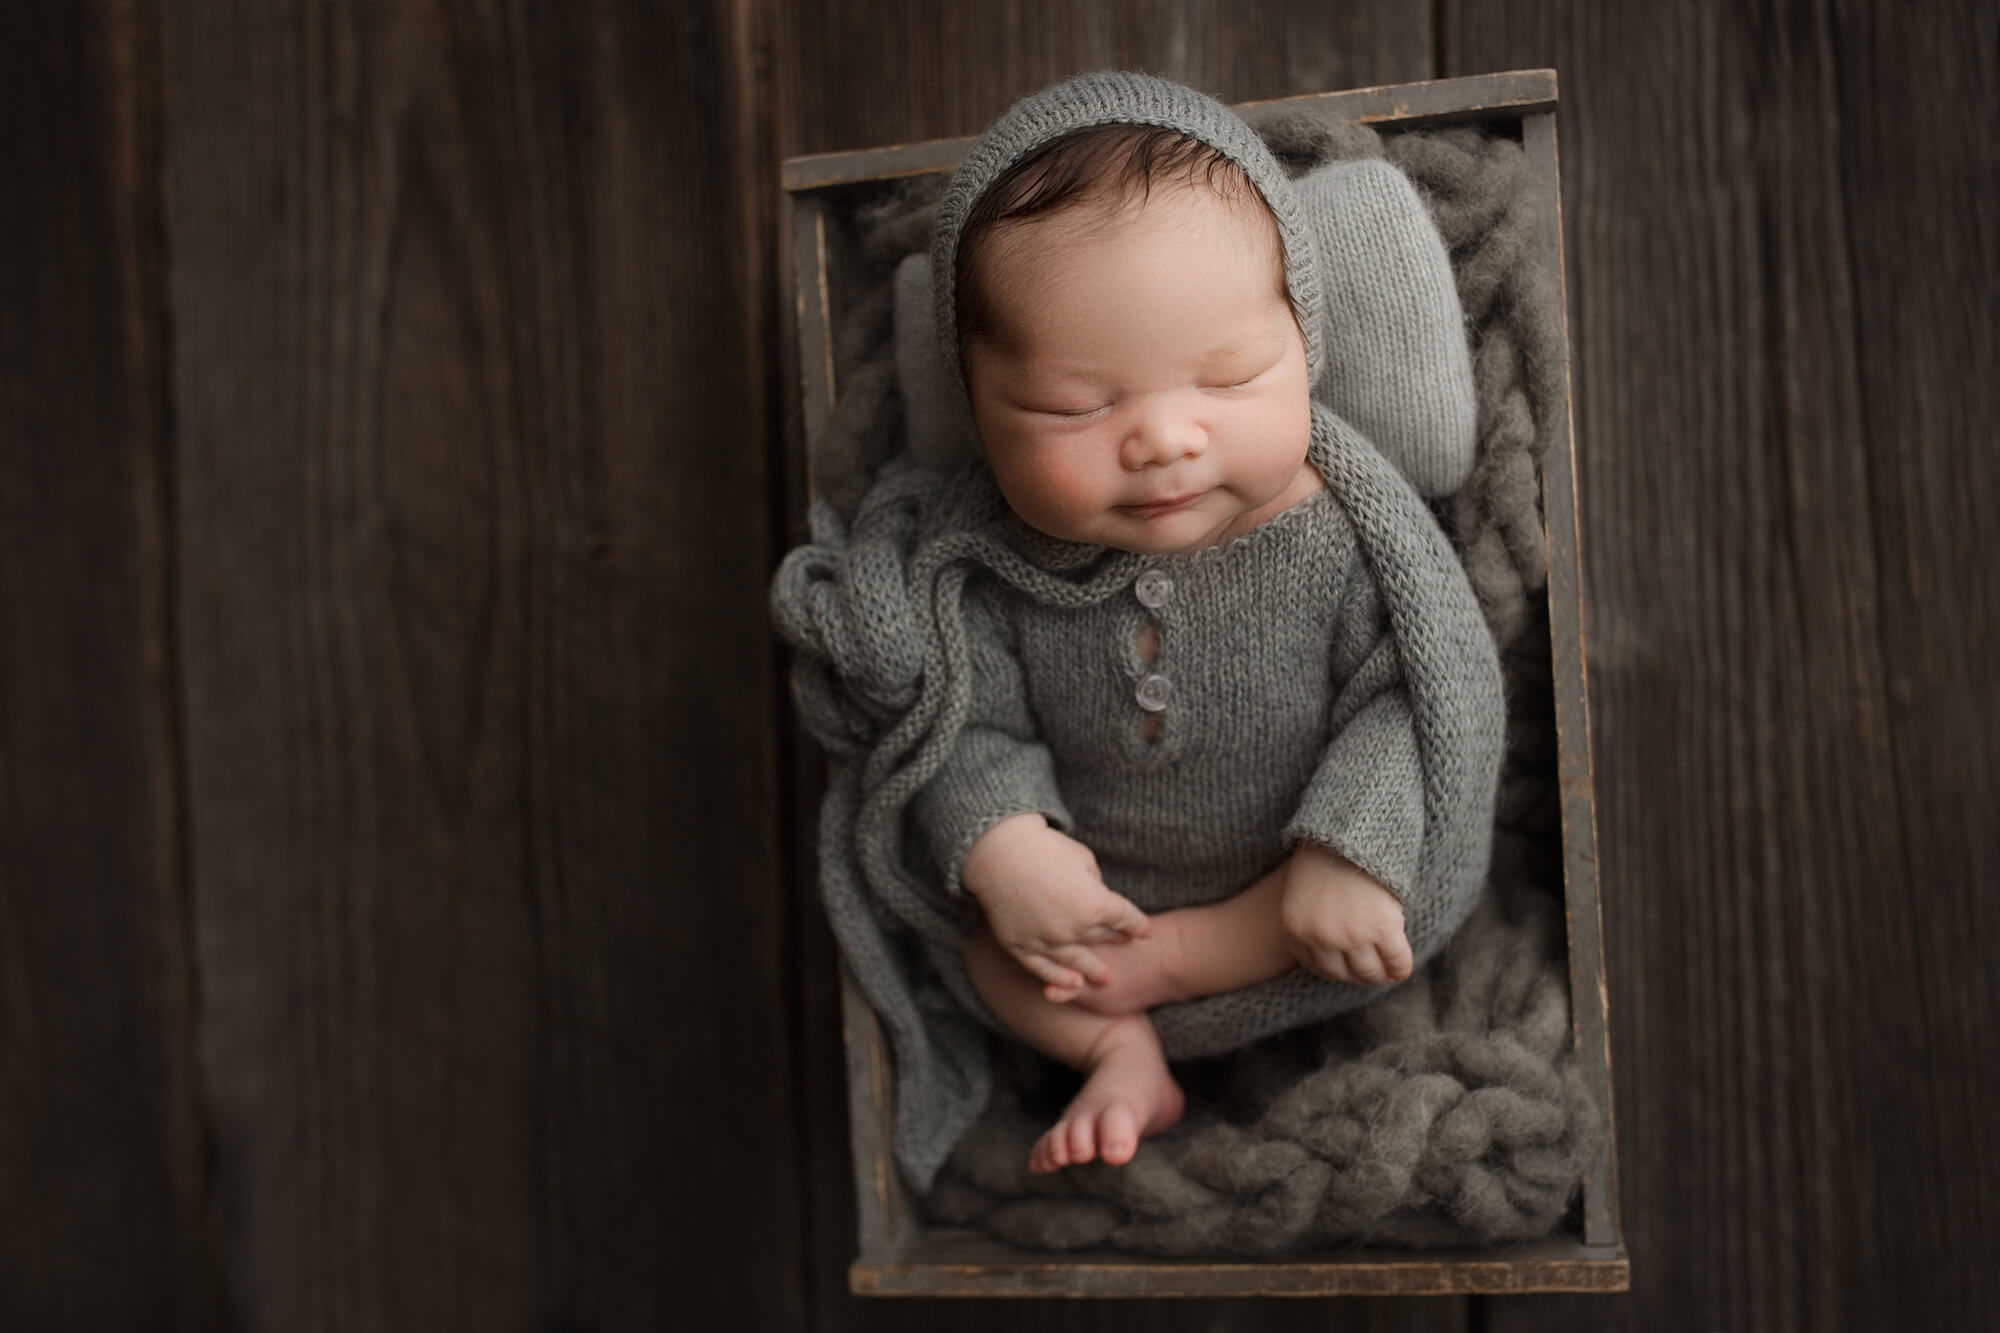 seattle newborn photographer | baby photography tacoma